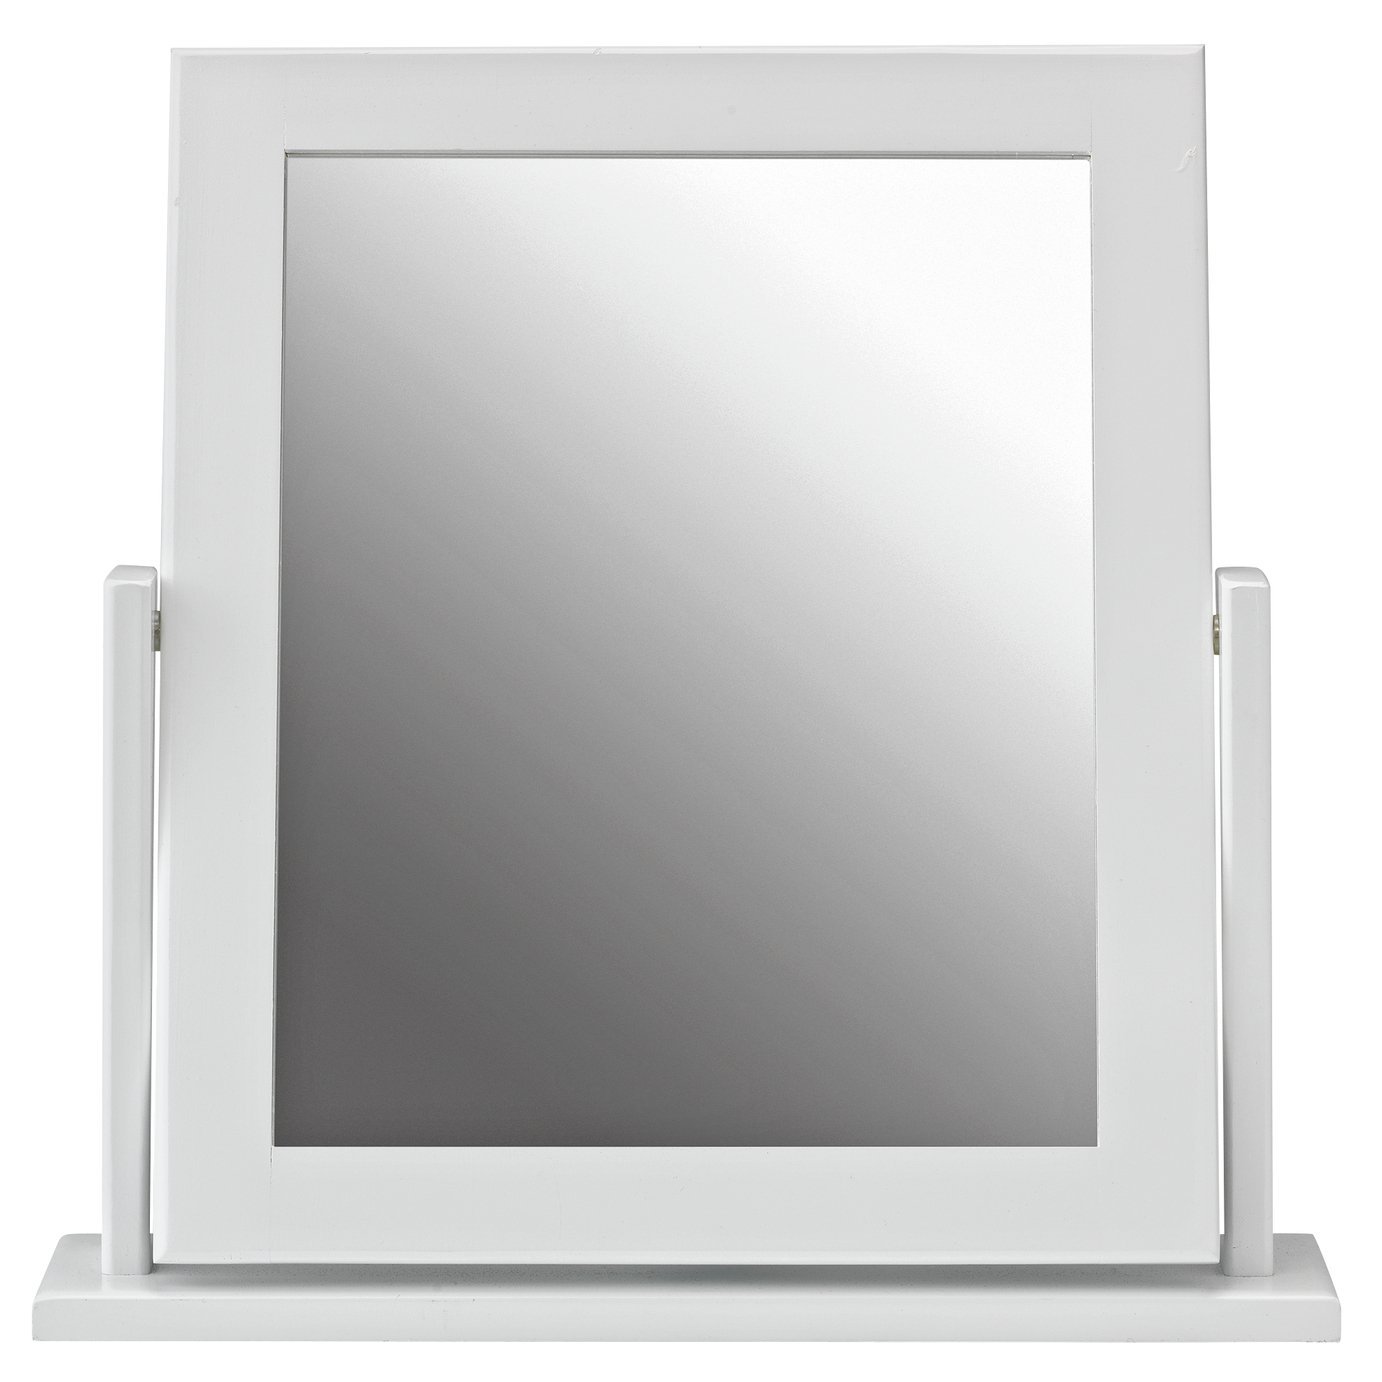 Argos Home Square Dressing Table Mirror - White